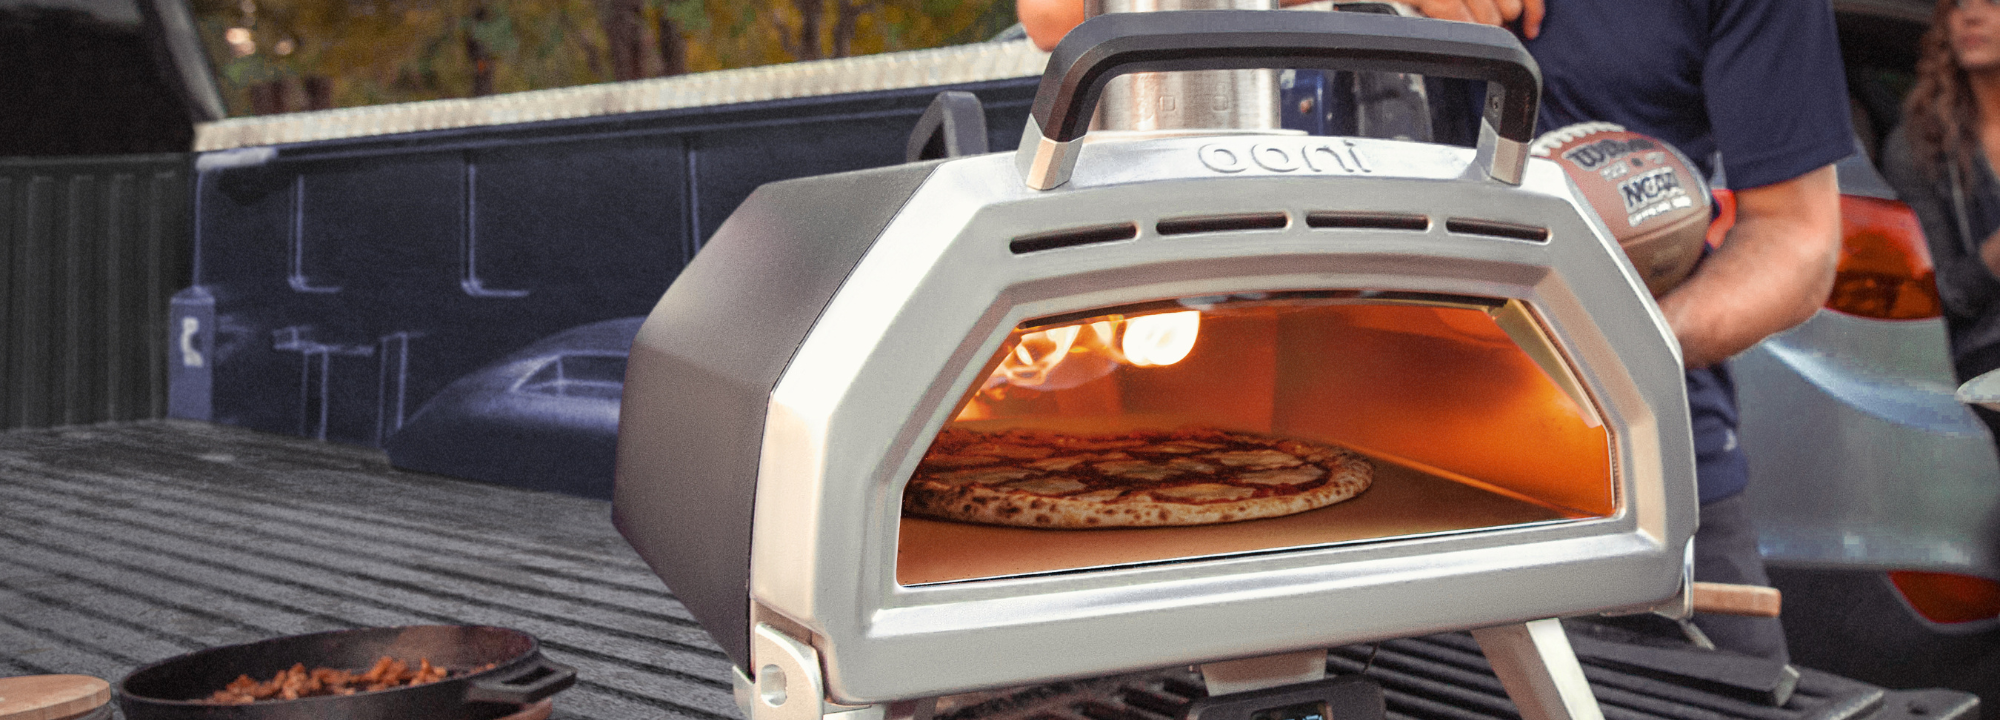 Ooni Karu 16 Multi-Fuel Pizza Oven - Starter Kit